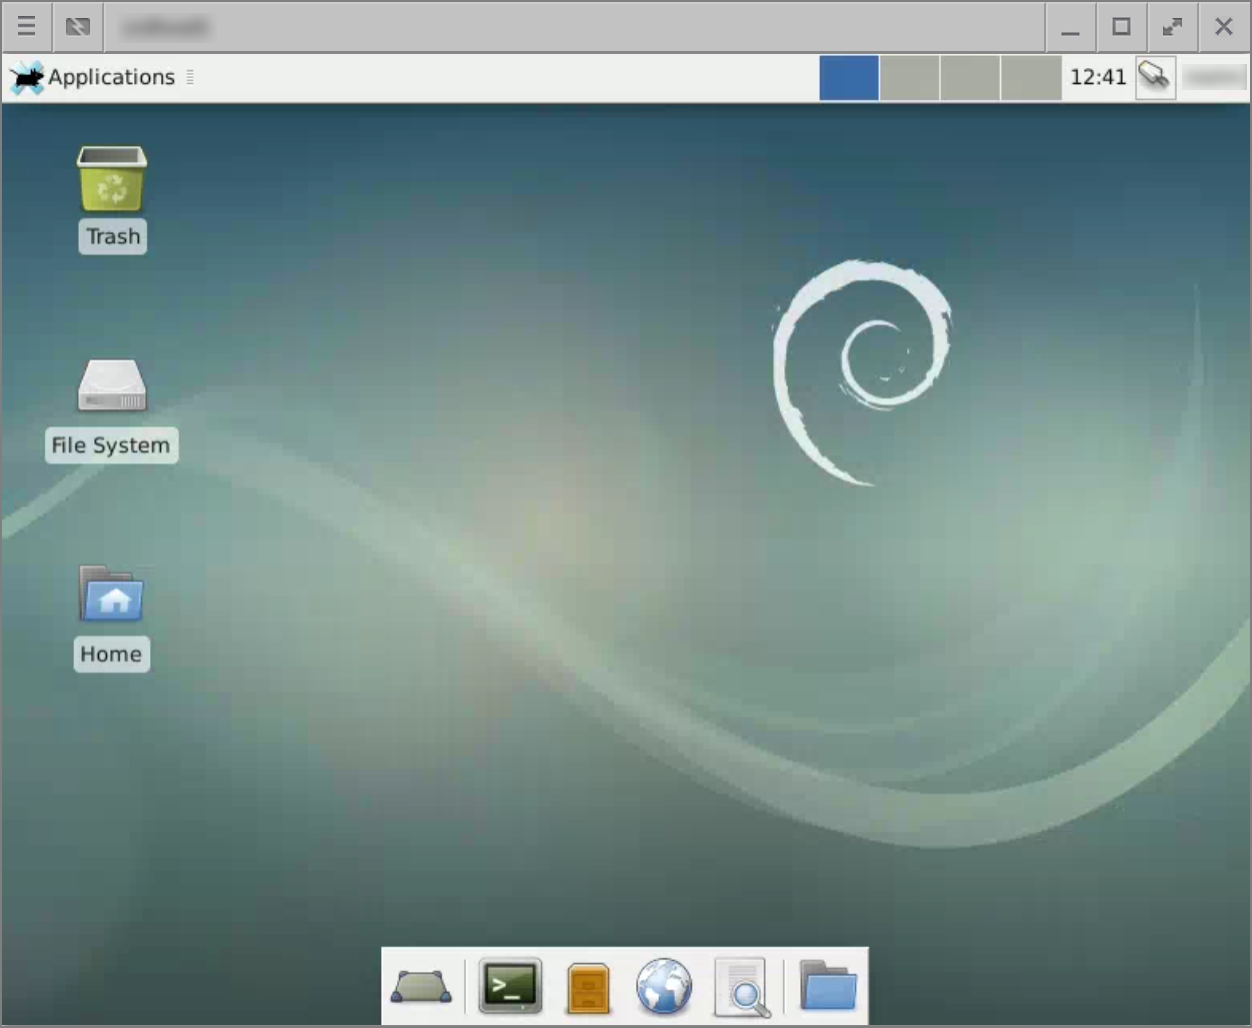 xfce desktop showing the taskbar and quick launch panel.